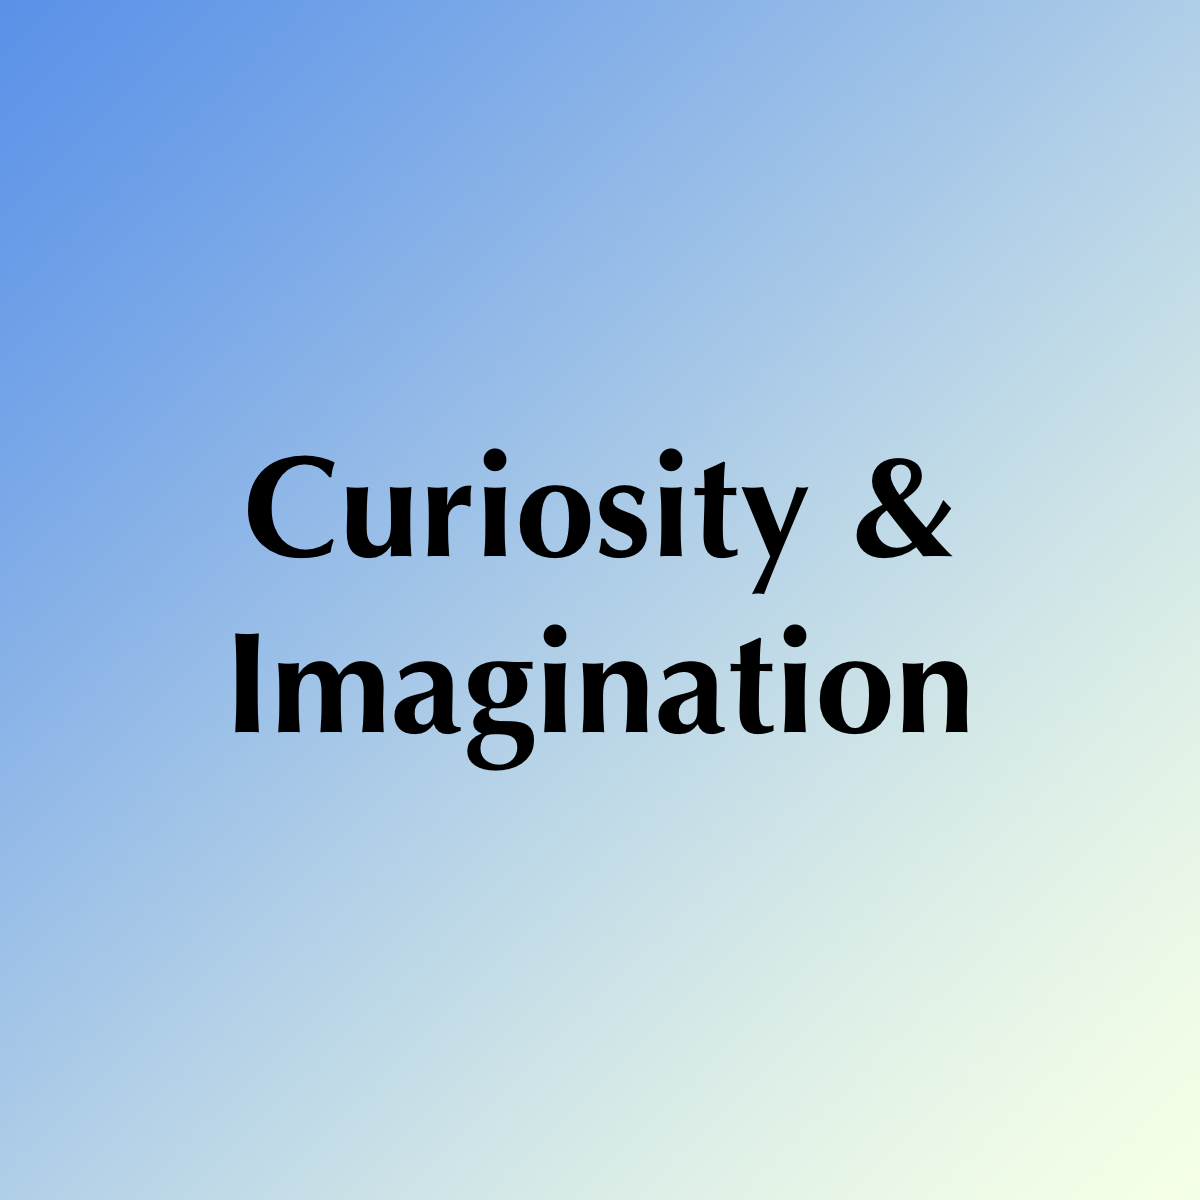 Curiosity & Imagination